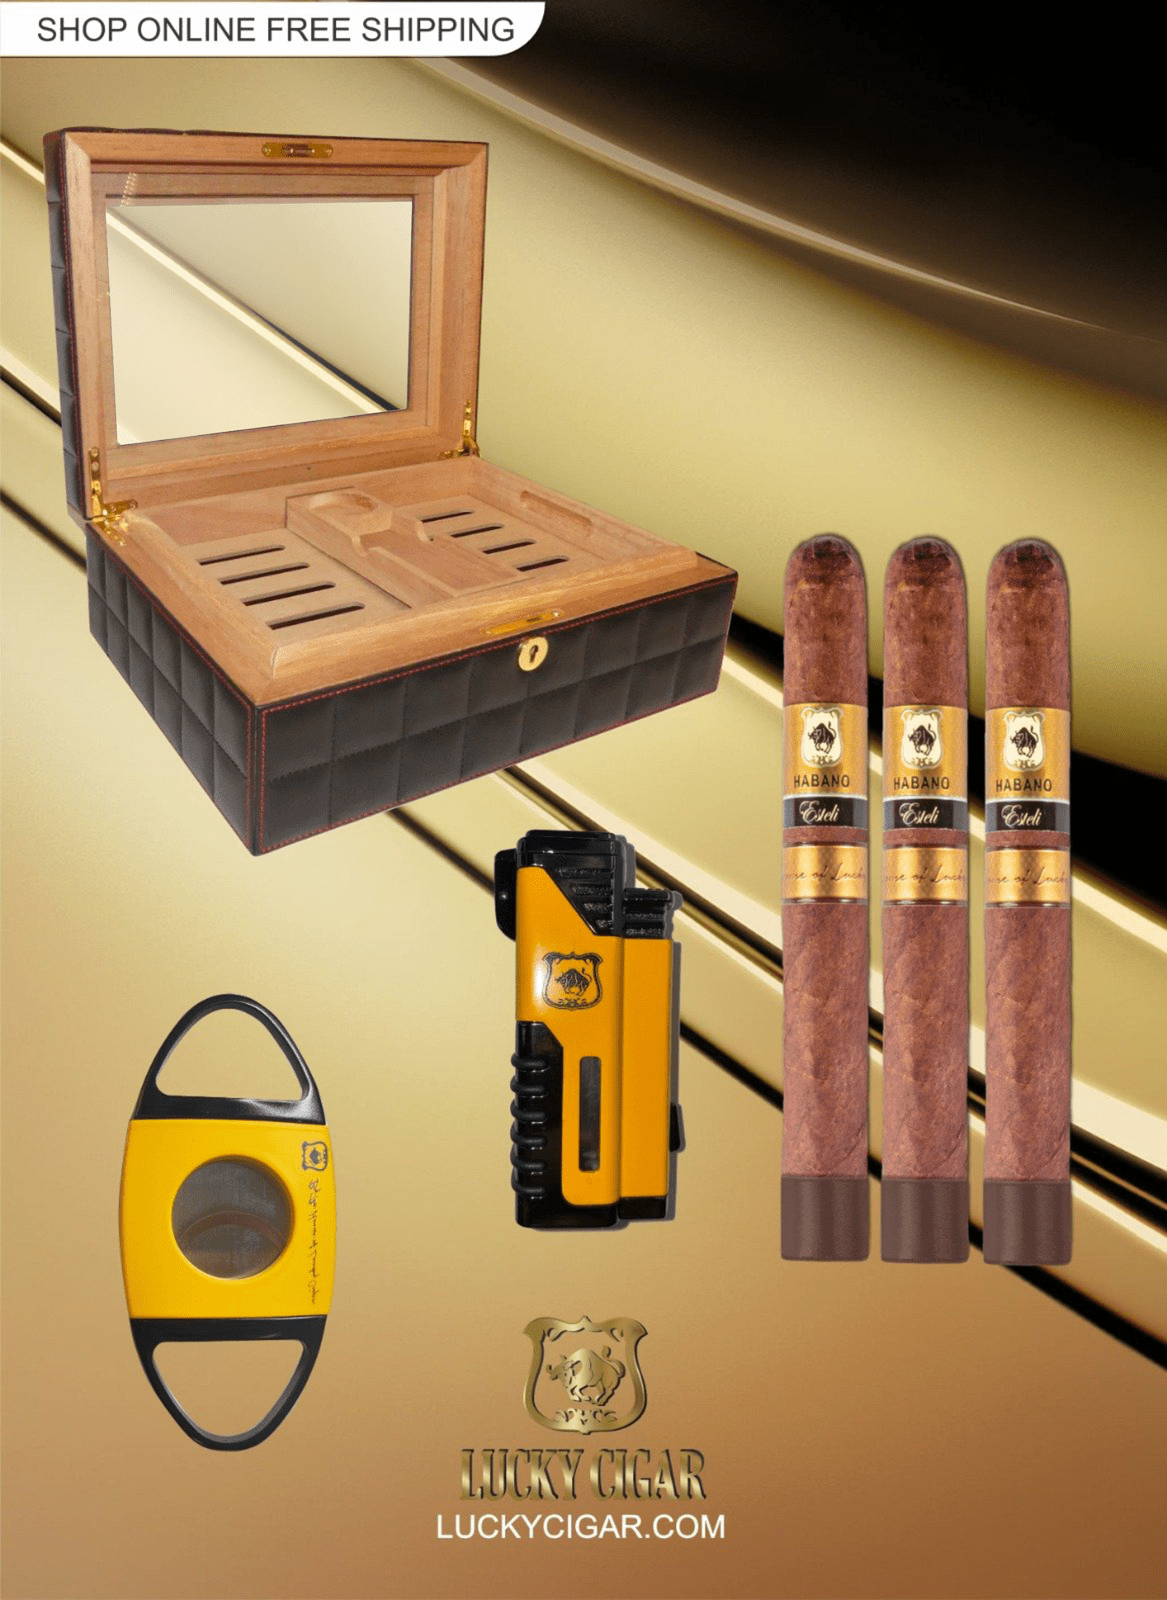 Lucky Cigar Sampler Sets: Set of 3 Habano Esteli Toro Cigars with Desk Humidor, Torch, Cutter